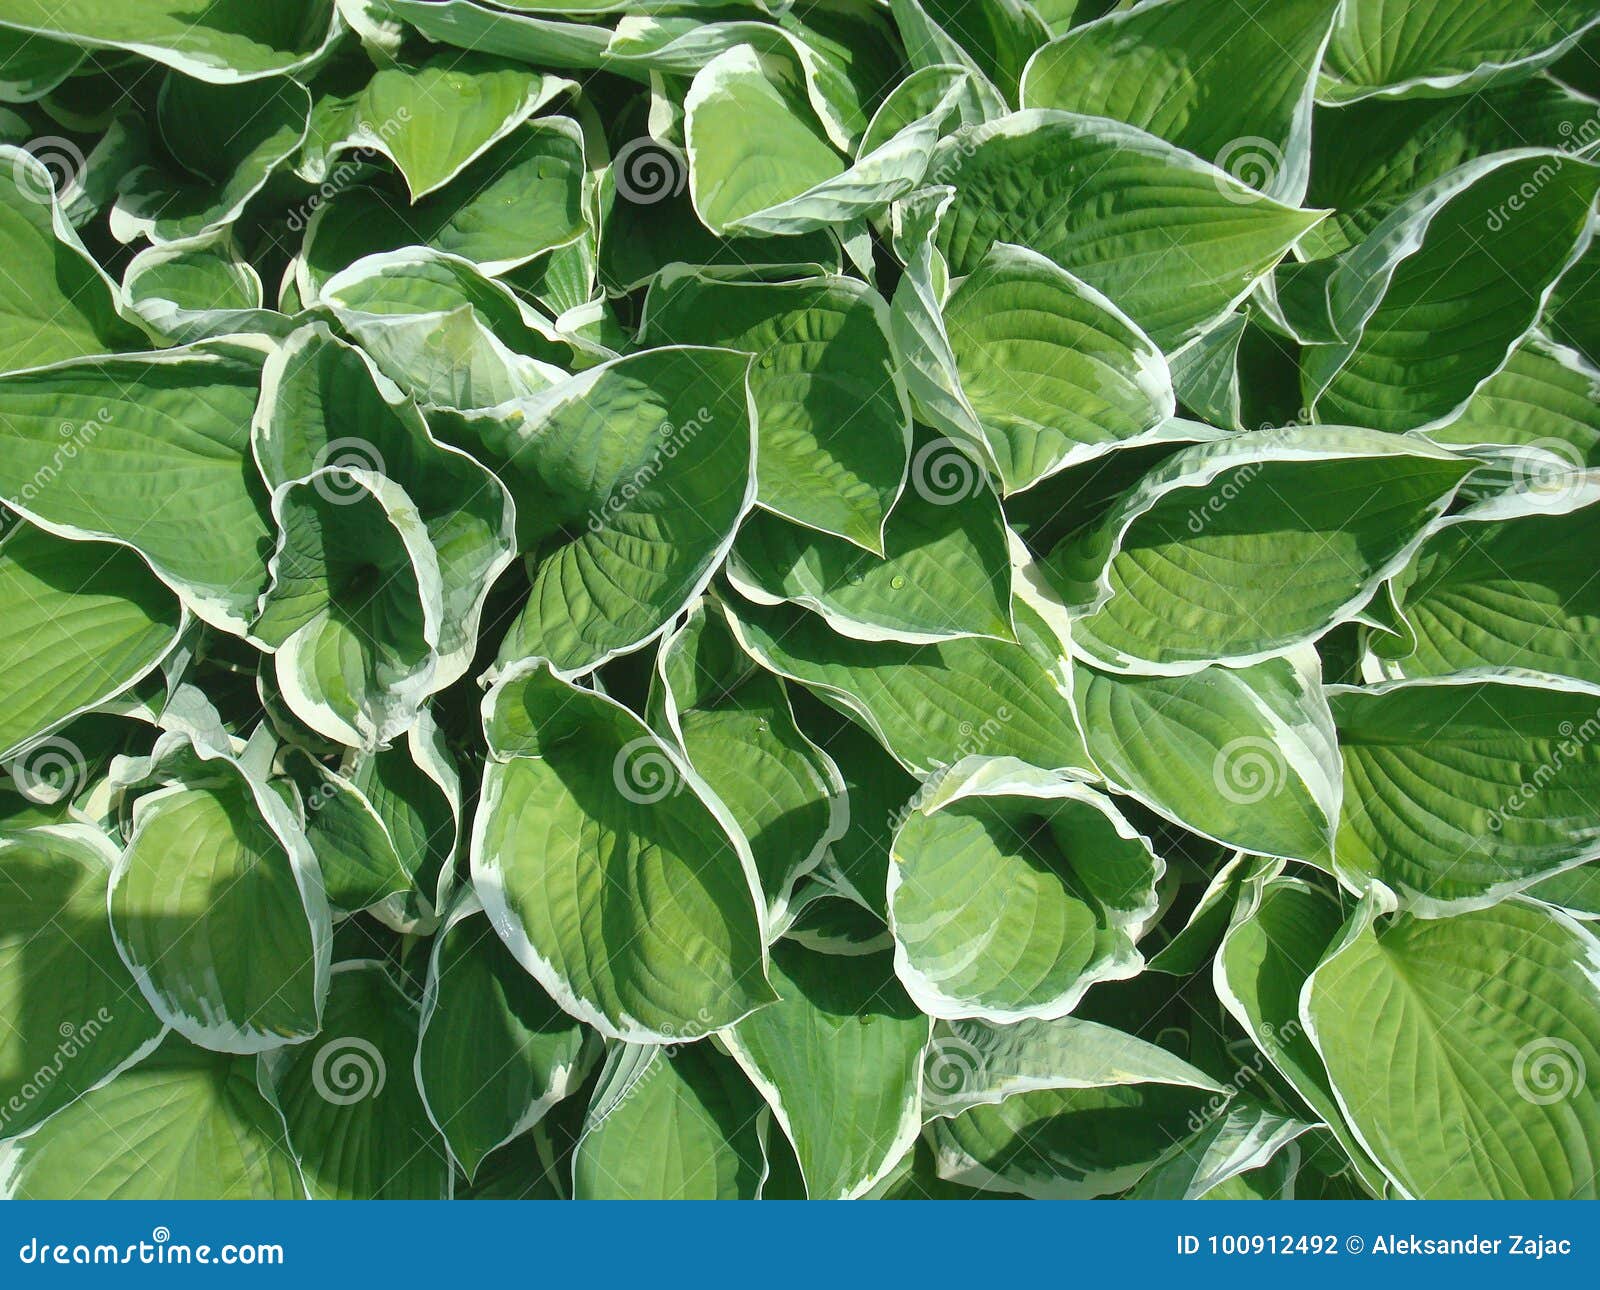 Green leaves wallpaper 04 stock photo. Image of garden - 100912492